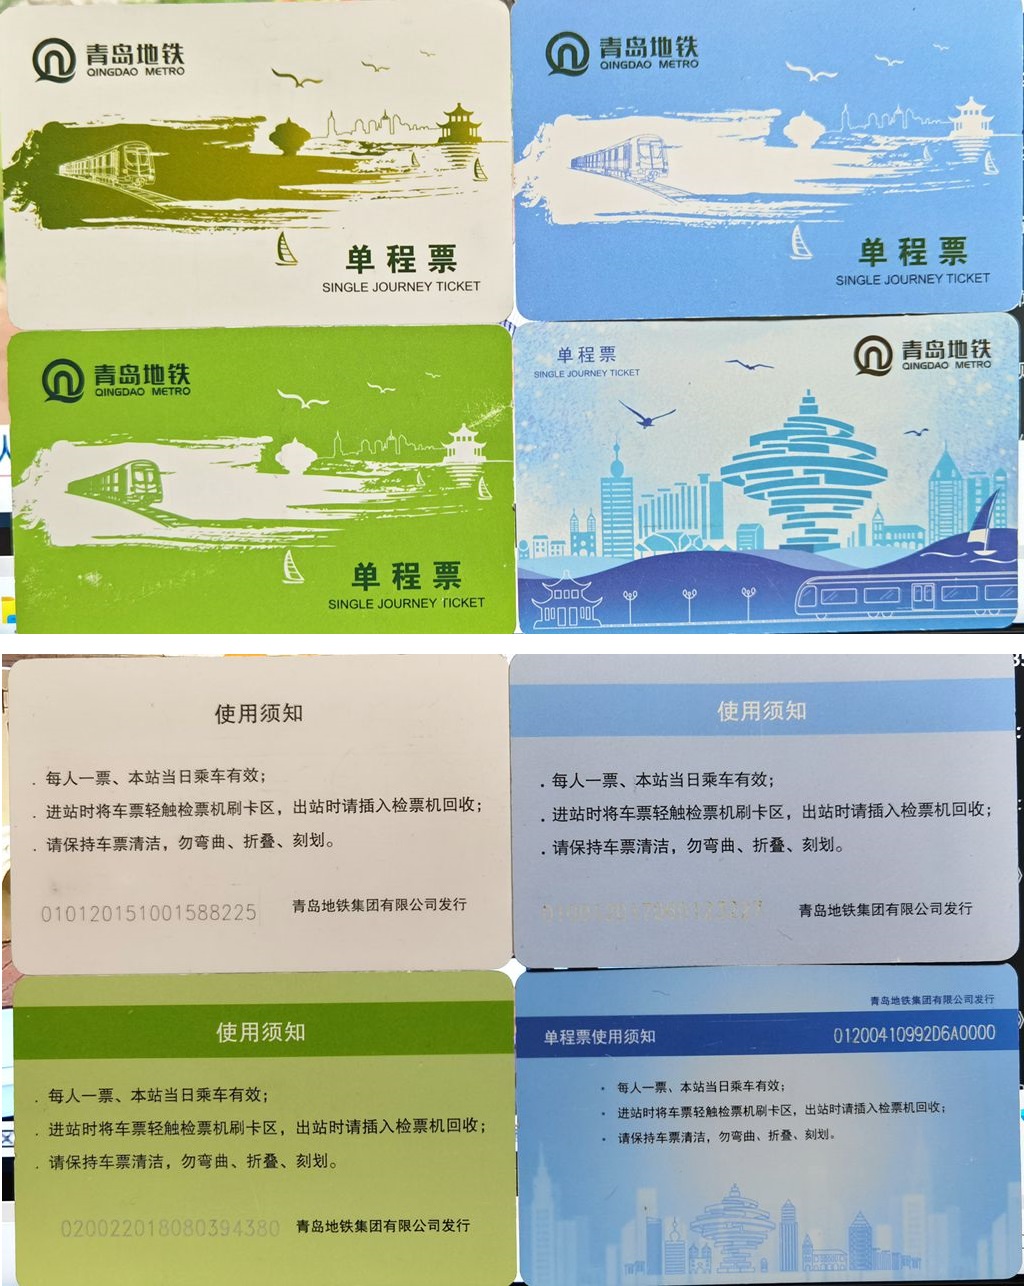 T5271, China Qingdao City, Metro Card (Subway Ticket), 2 pcs, One Way 2020, Unvalid